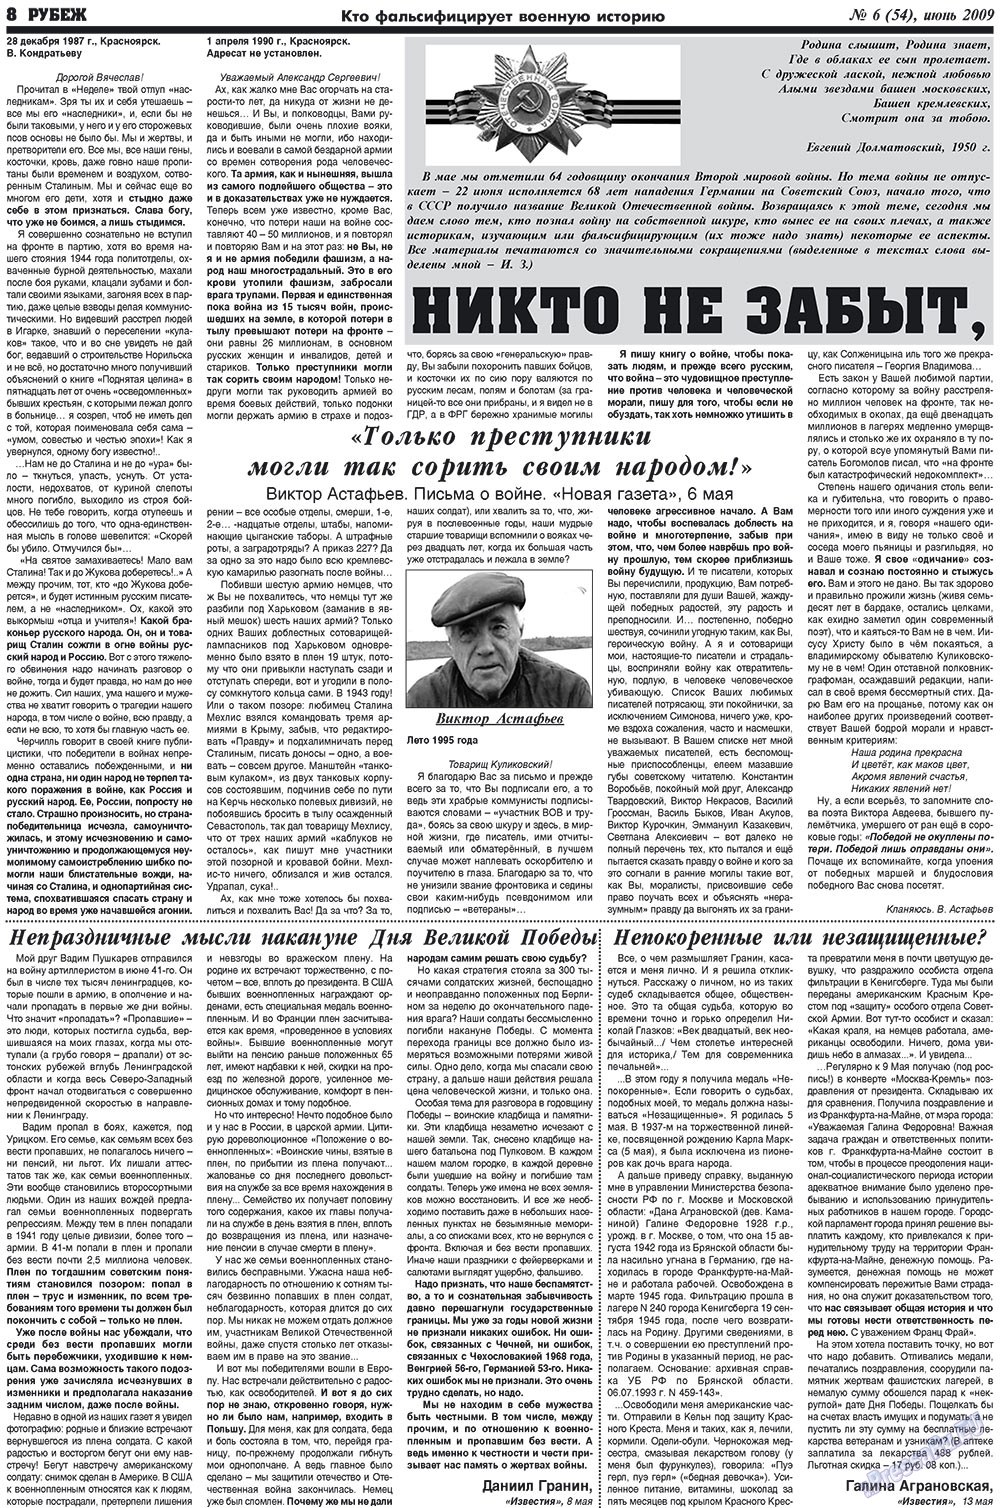 Рубеж, газета. 2009 №6 стр.8